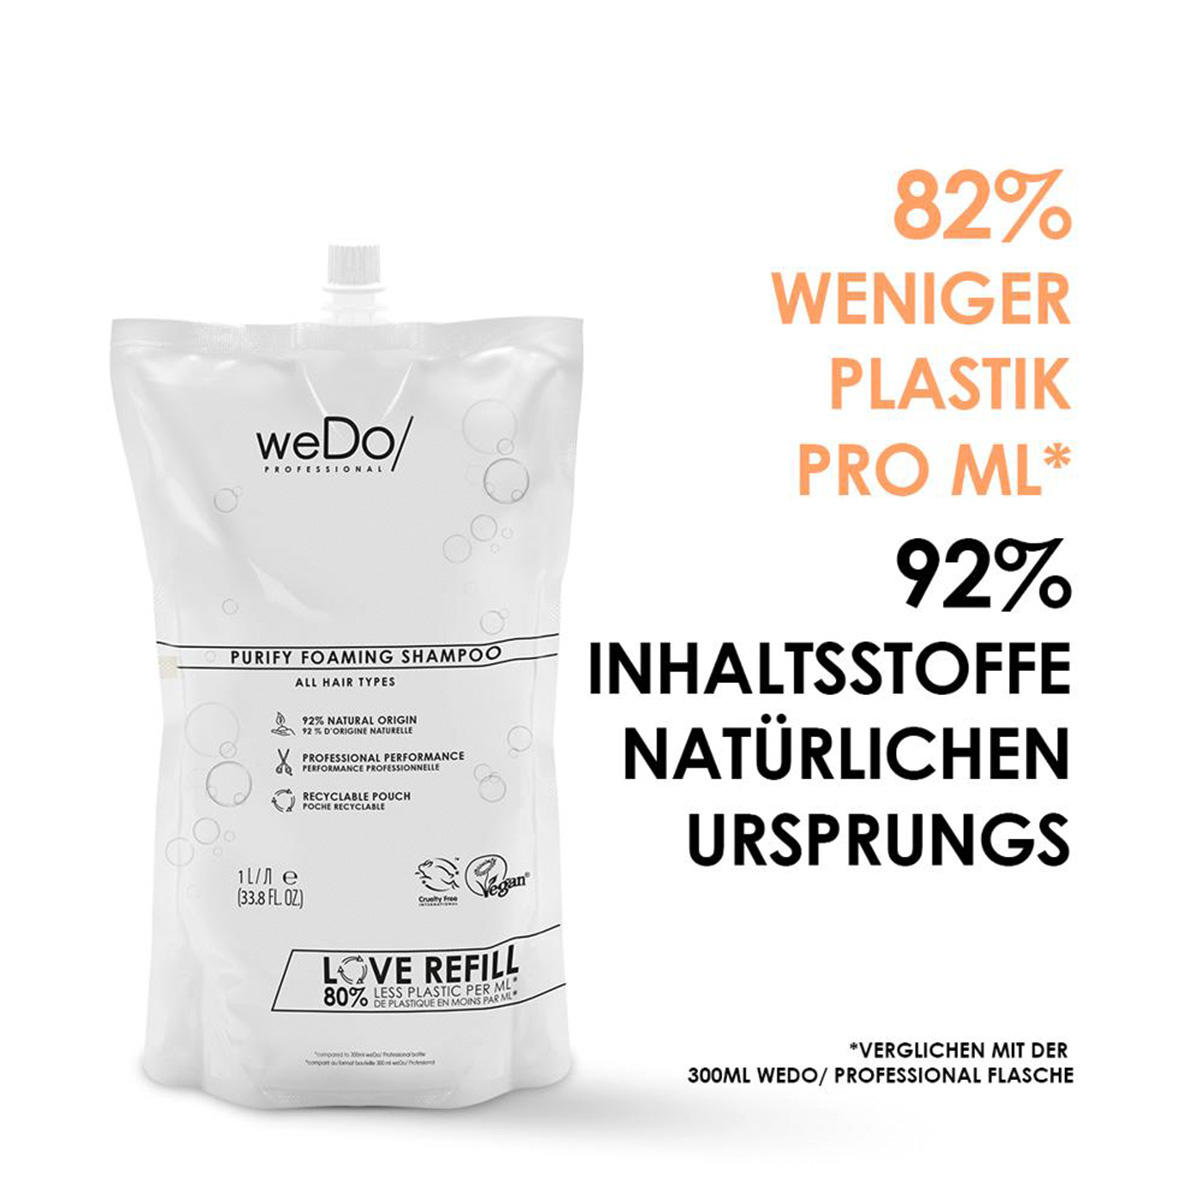 weDo/ Purify Foaming Shampoo Refill 1 Liter - 3